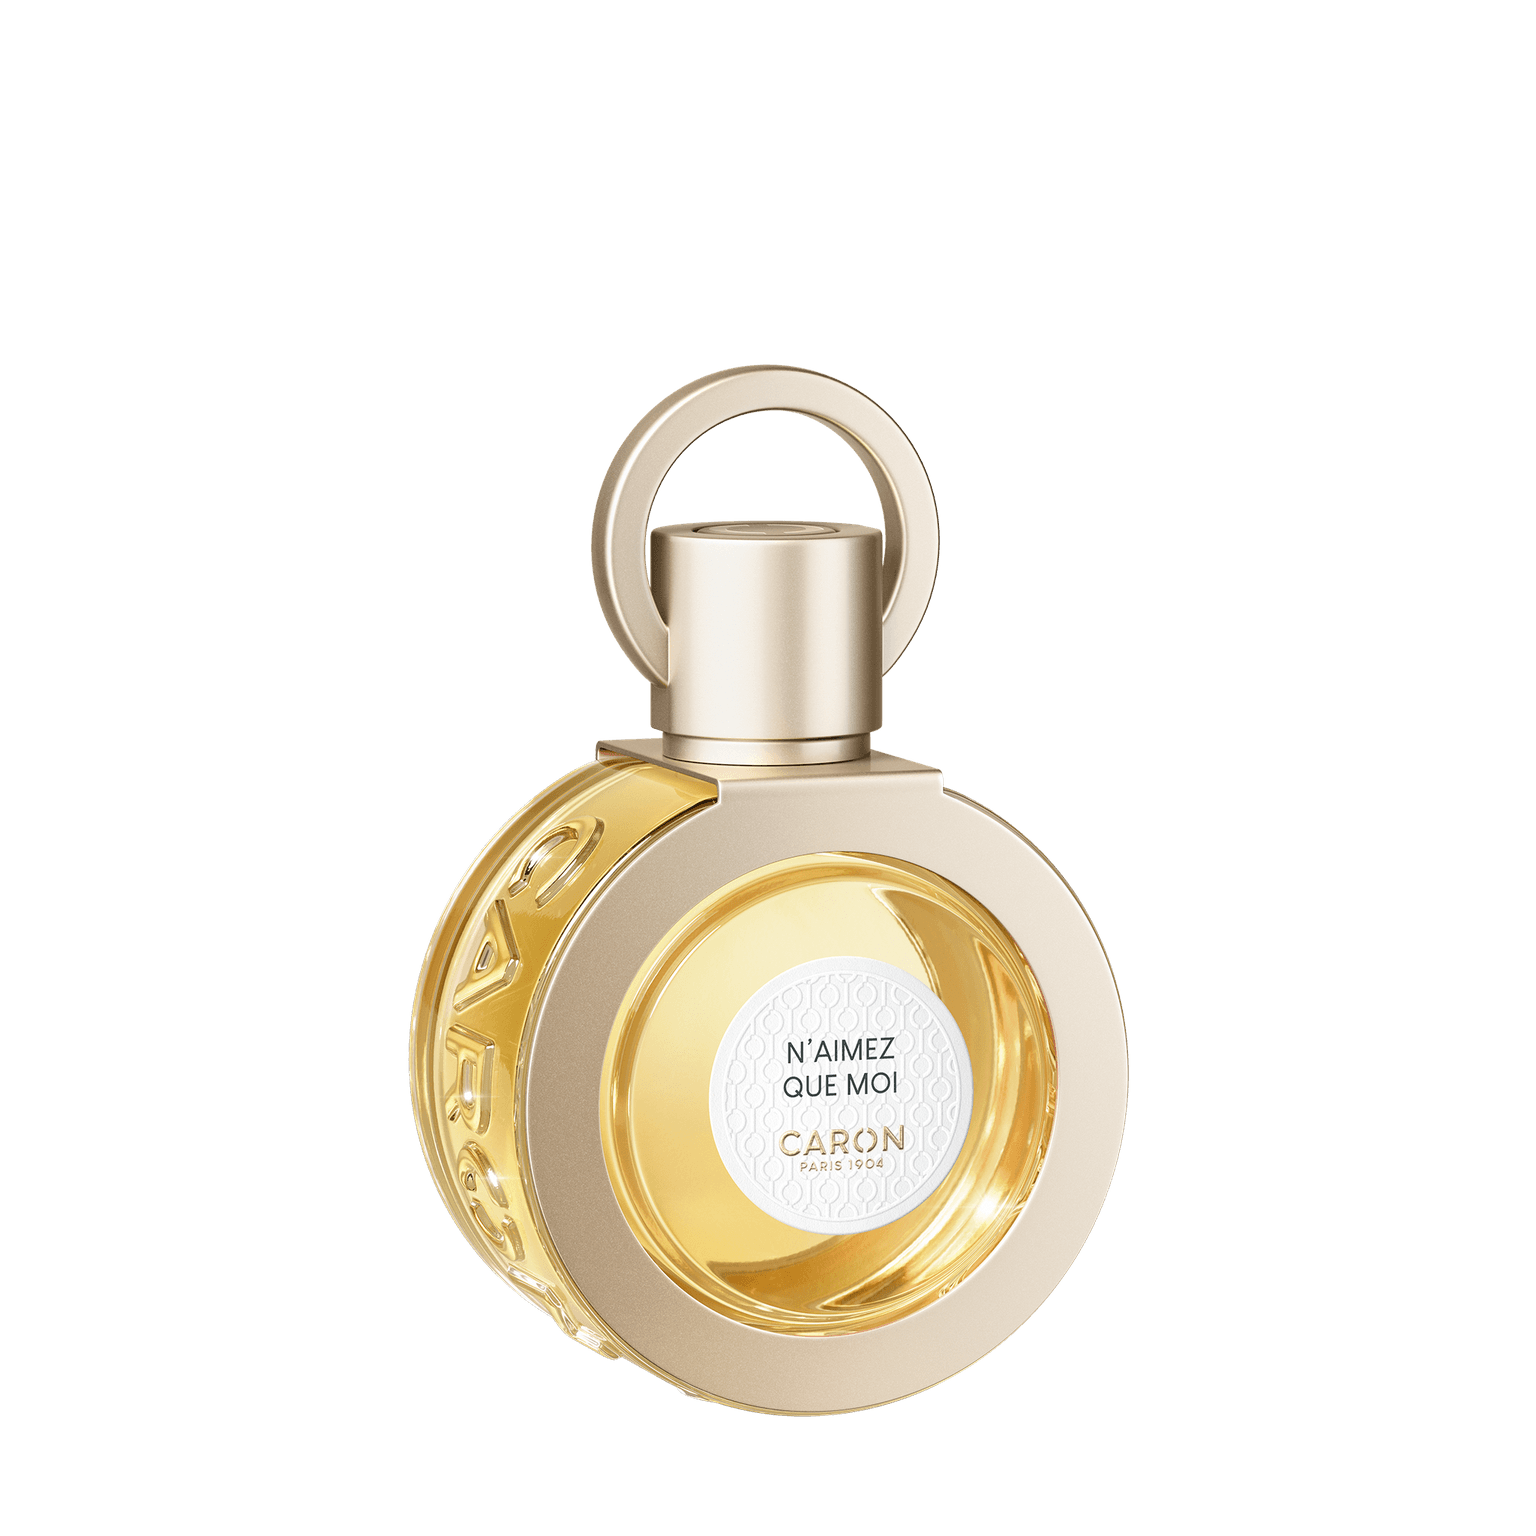 Caron N'Aimez Que Moi 50ml | Perfume Lounge.